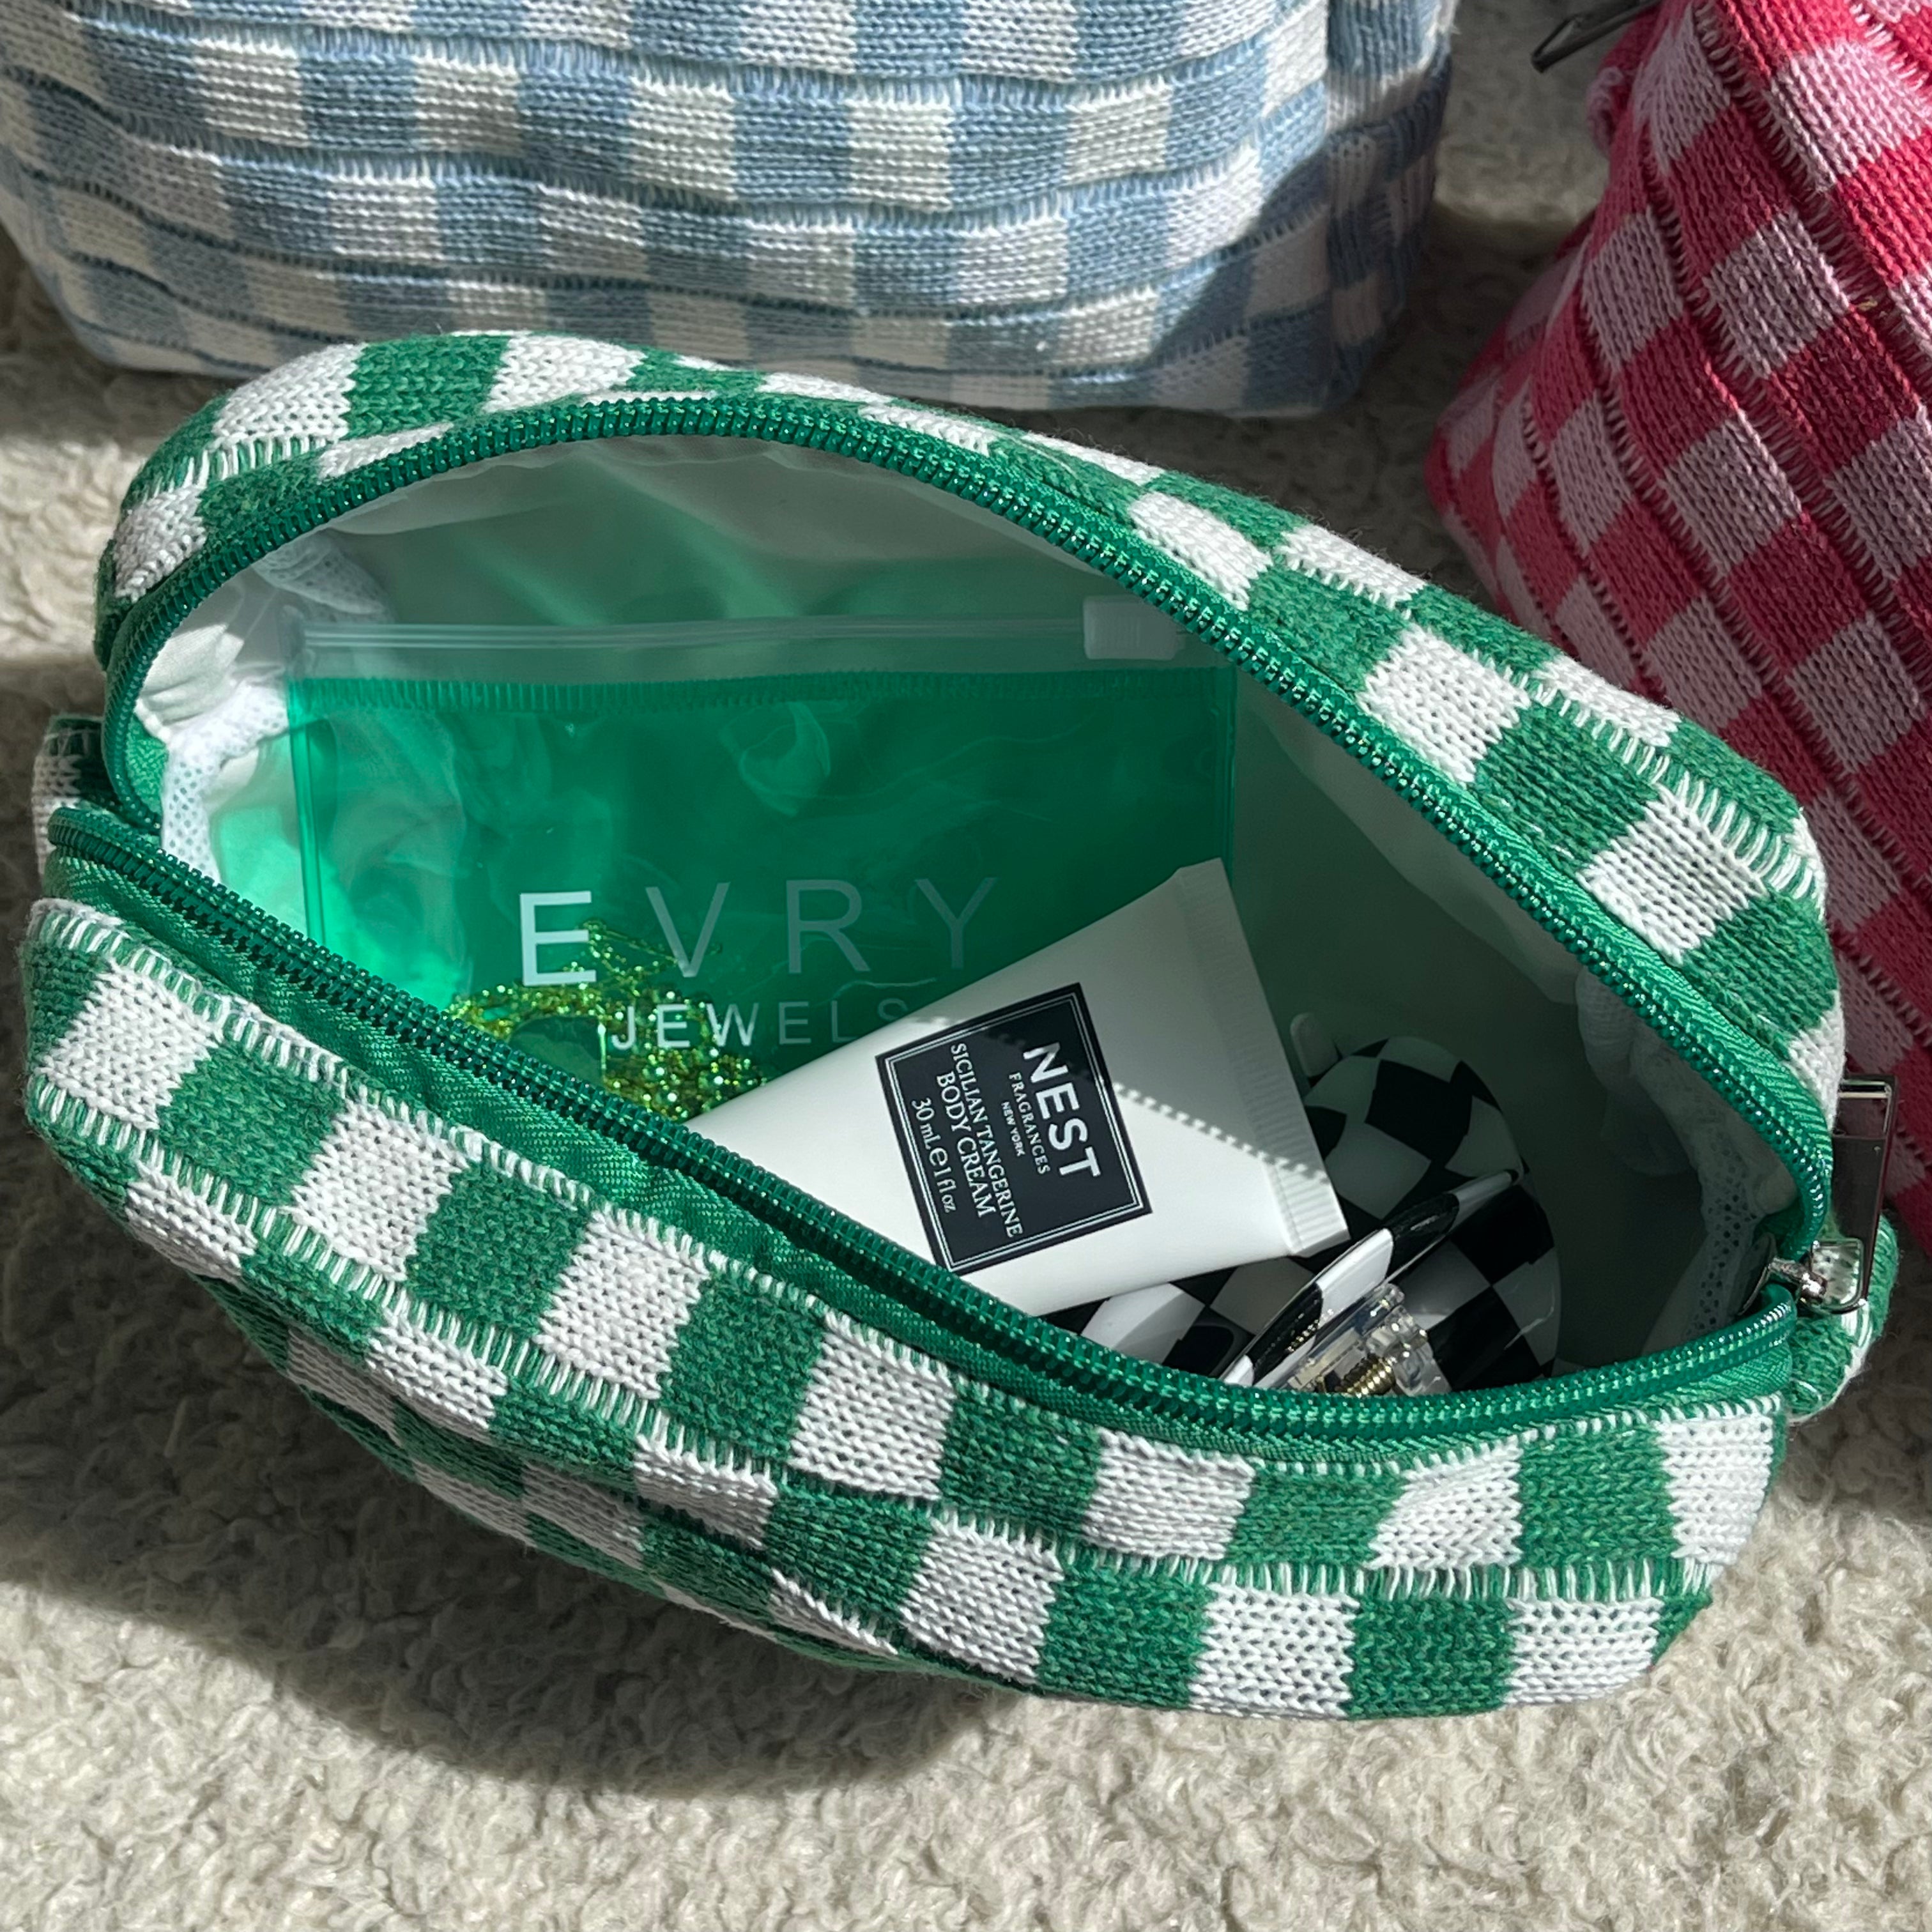 Checkered Makeup Bag – 52 West